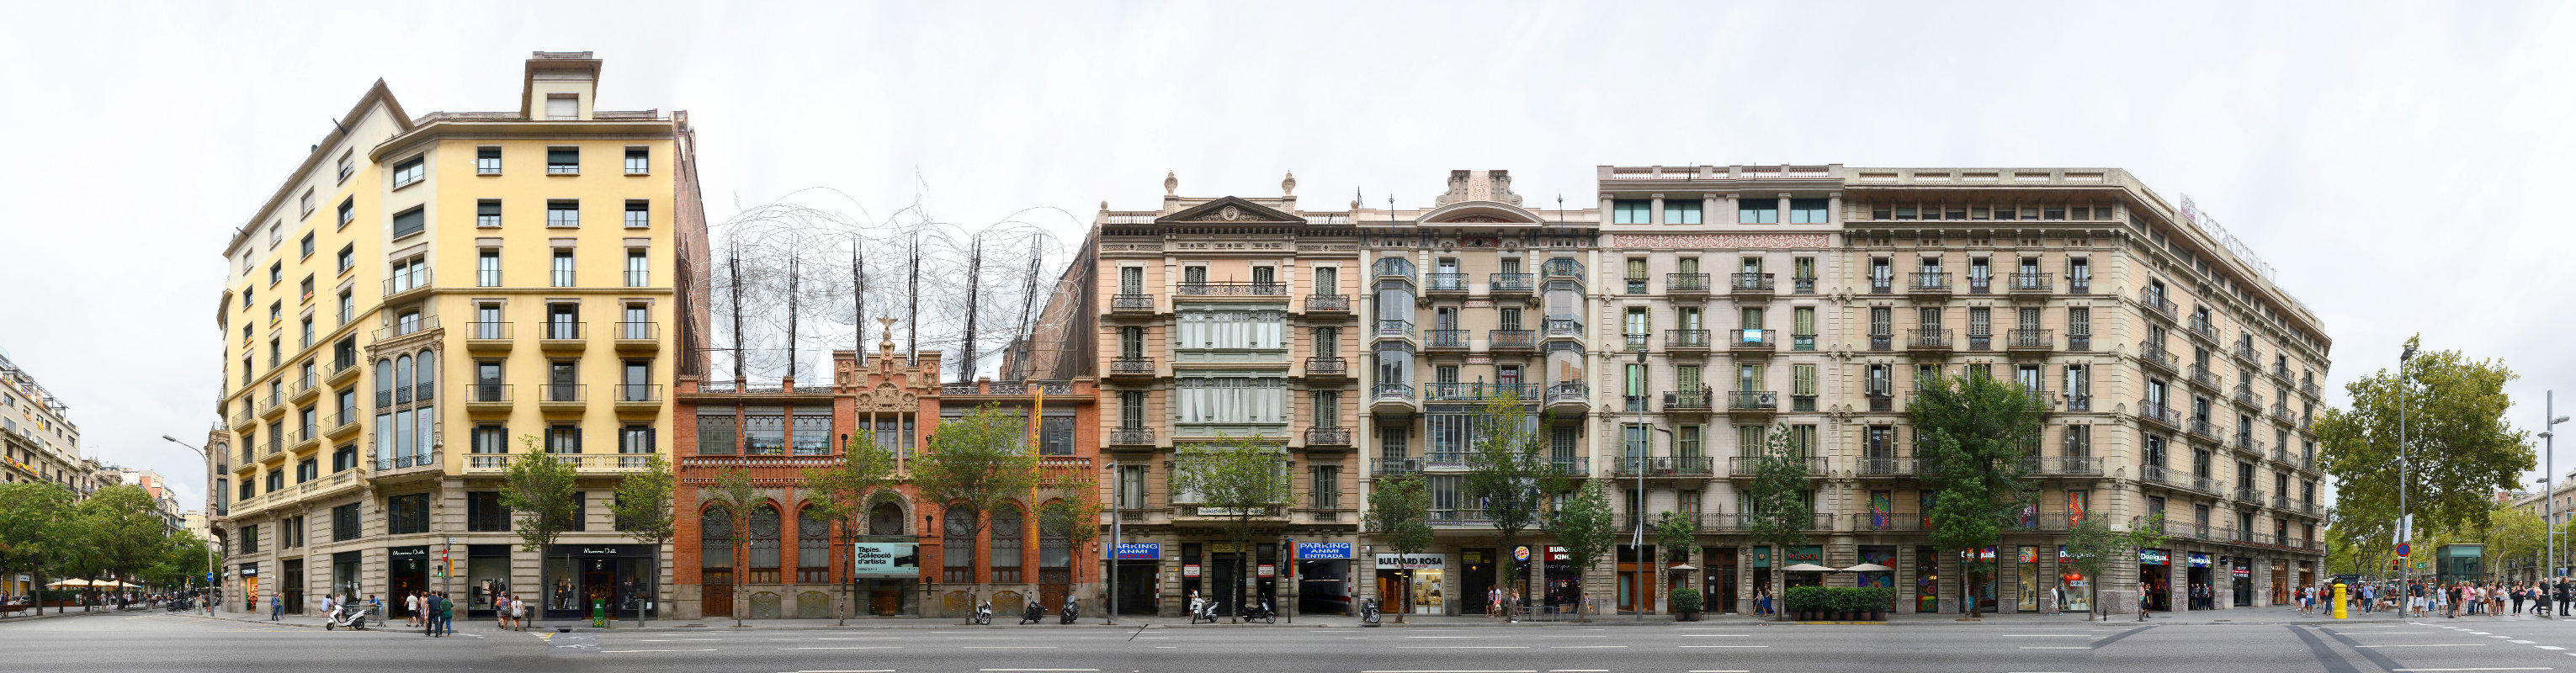 Fundació Antoni Tàpies Barcelona Architecture modern art